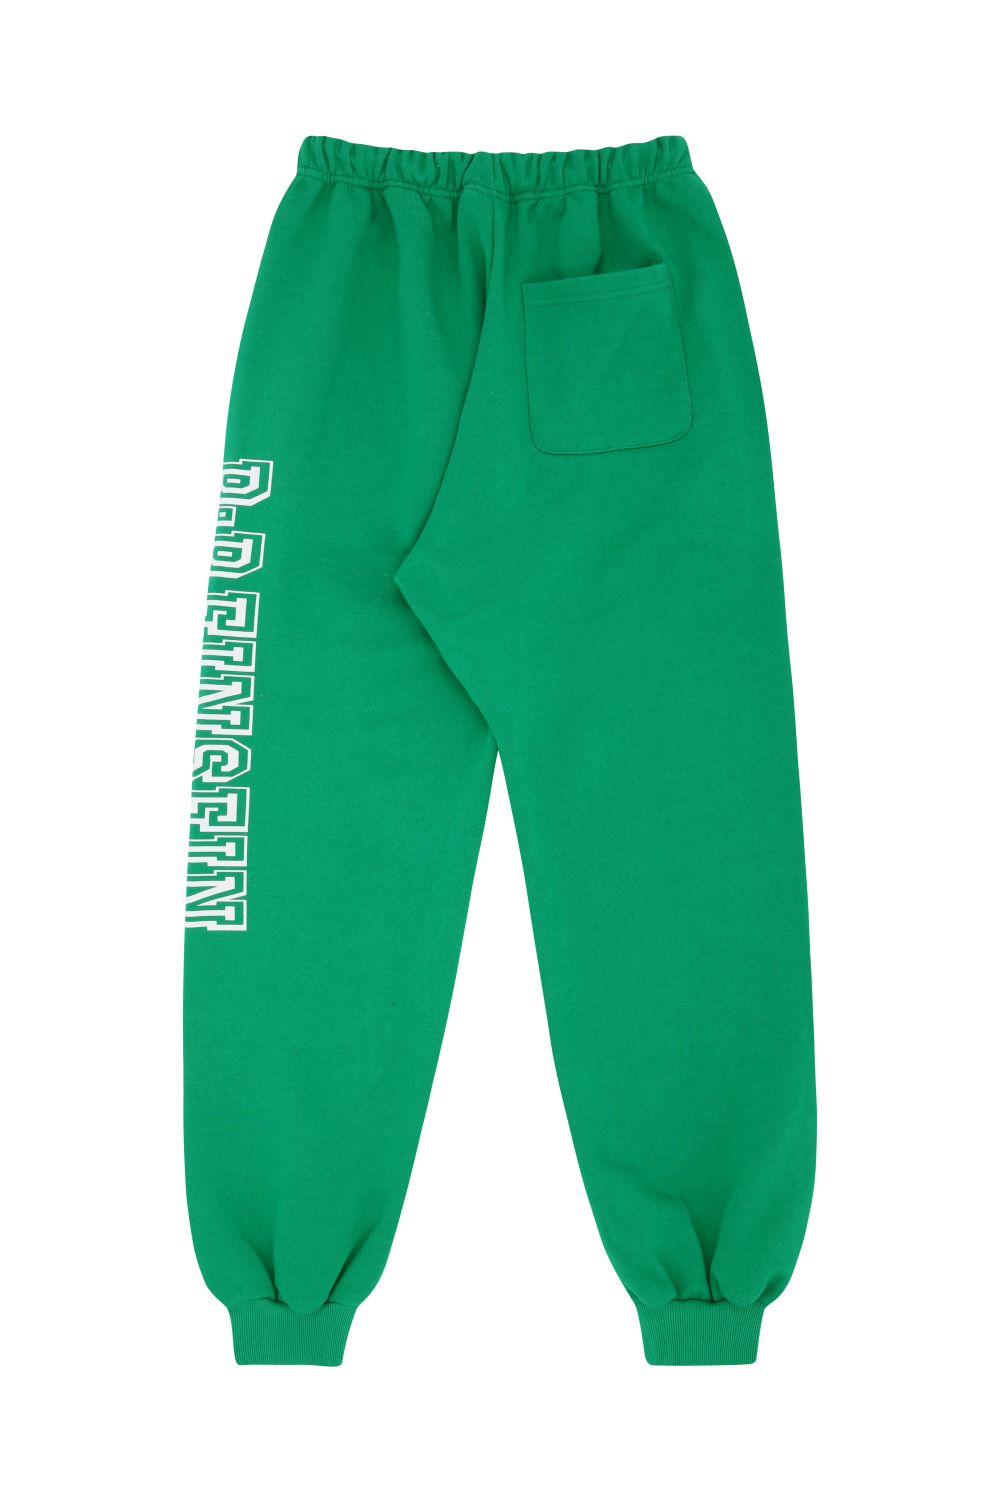 Green Graphic Jogger Pants